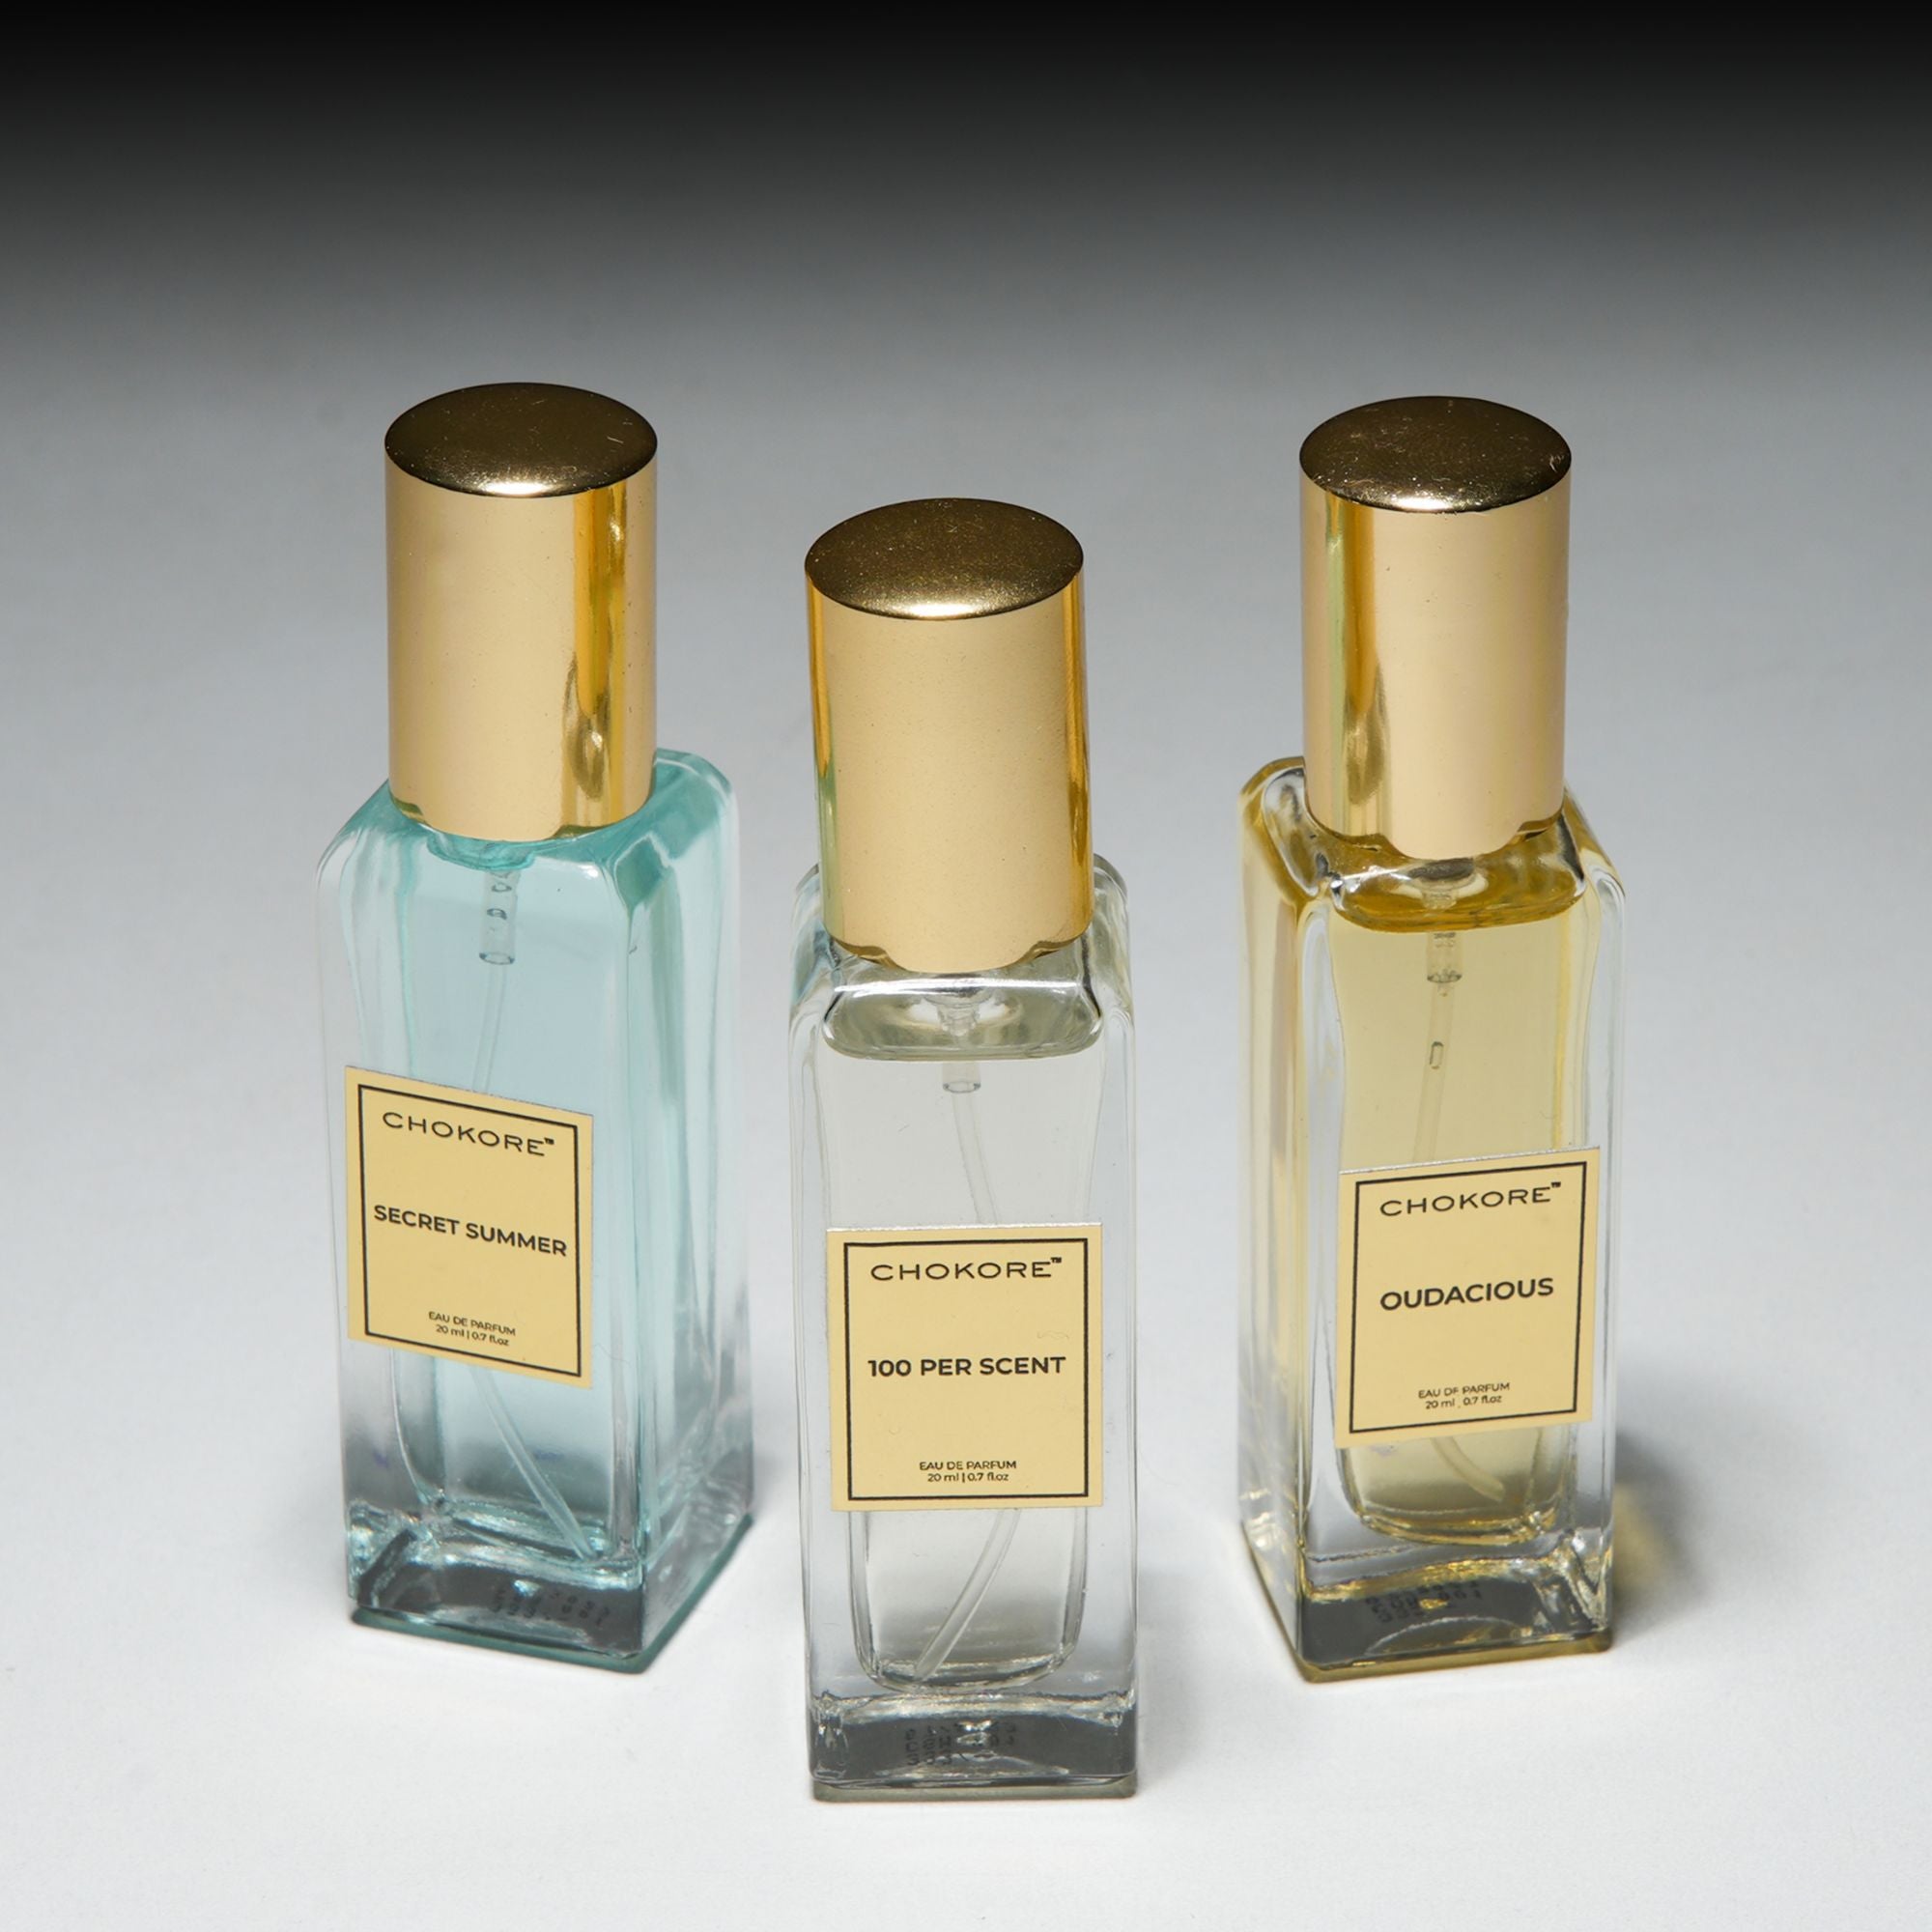 Chokore Perfume Combo Pack of 3 For Men & Women (Oudacious, 100 Per Scent, & Secret Summer) | 3 x 20 ml